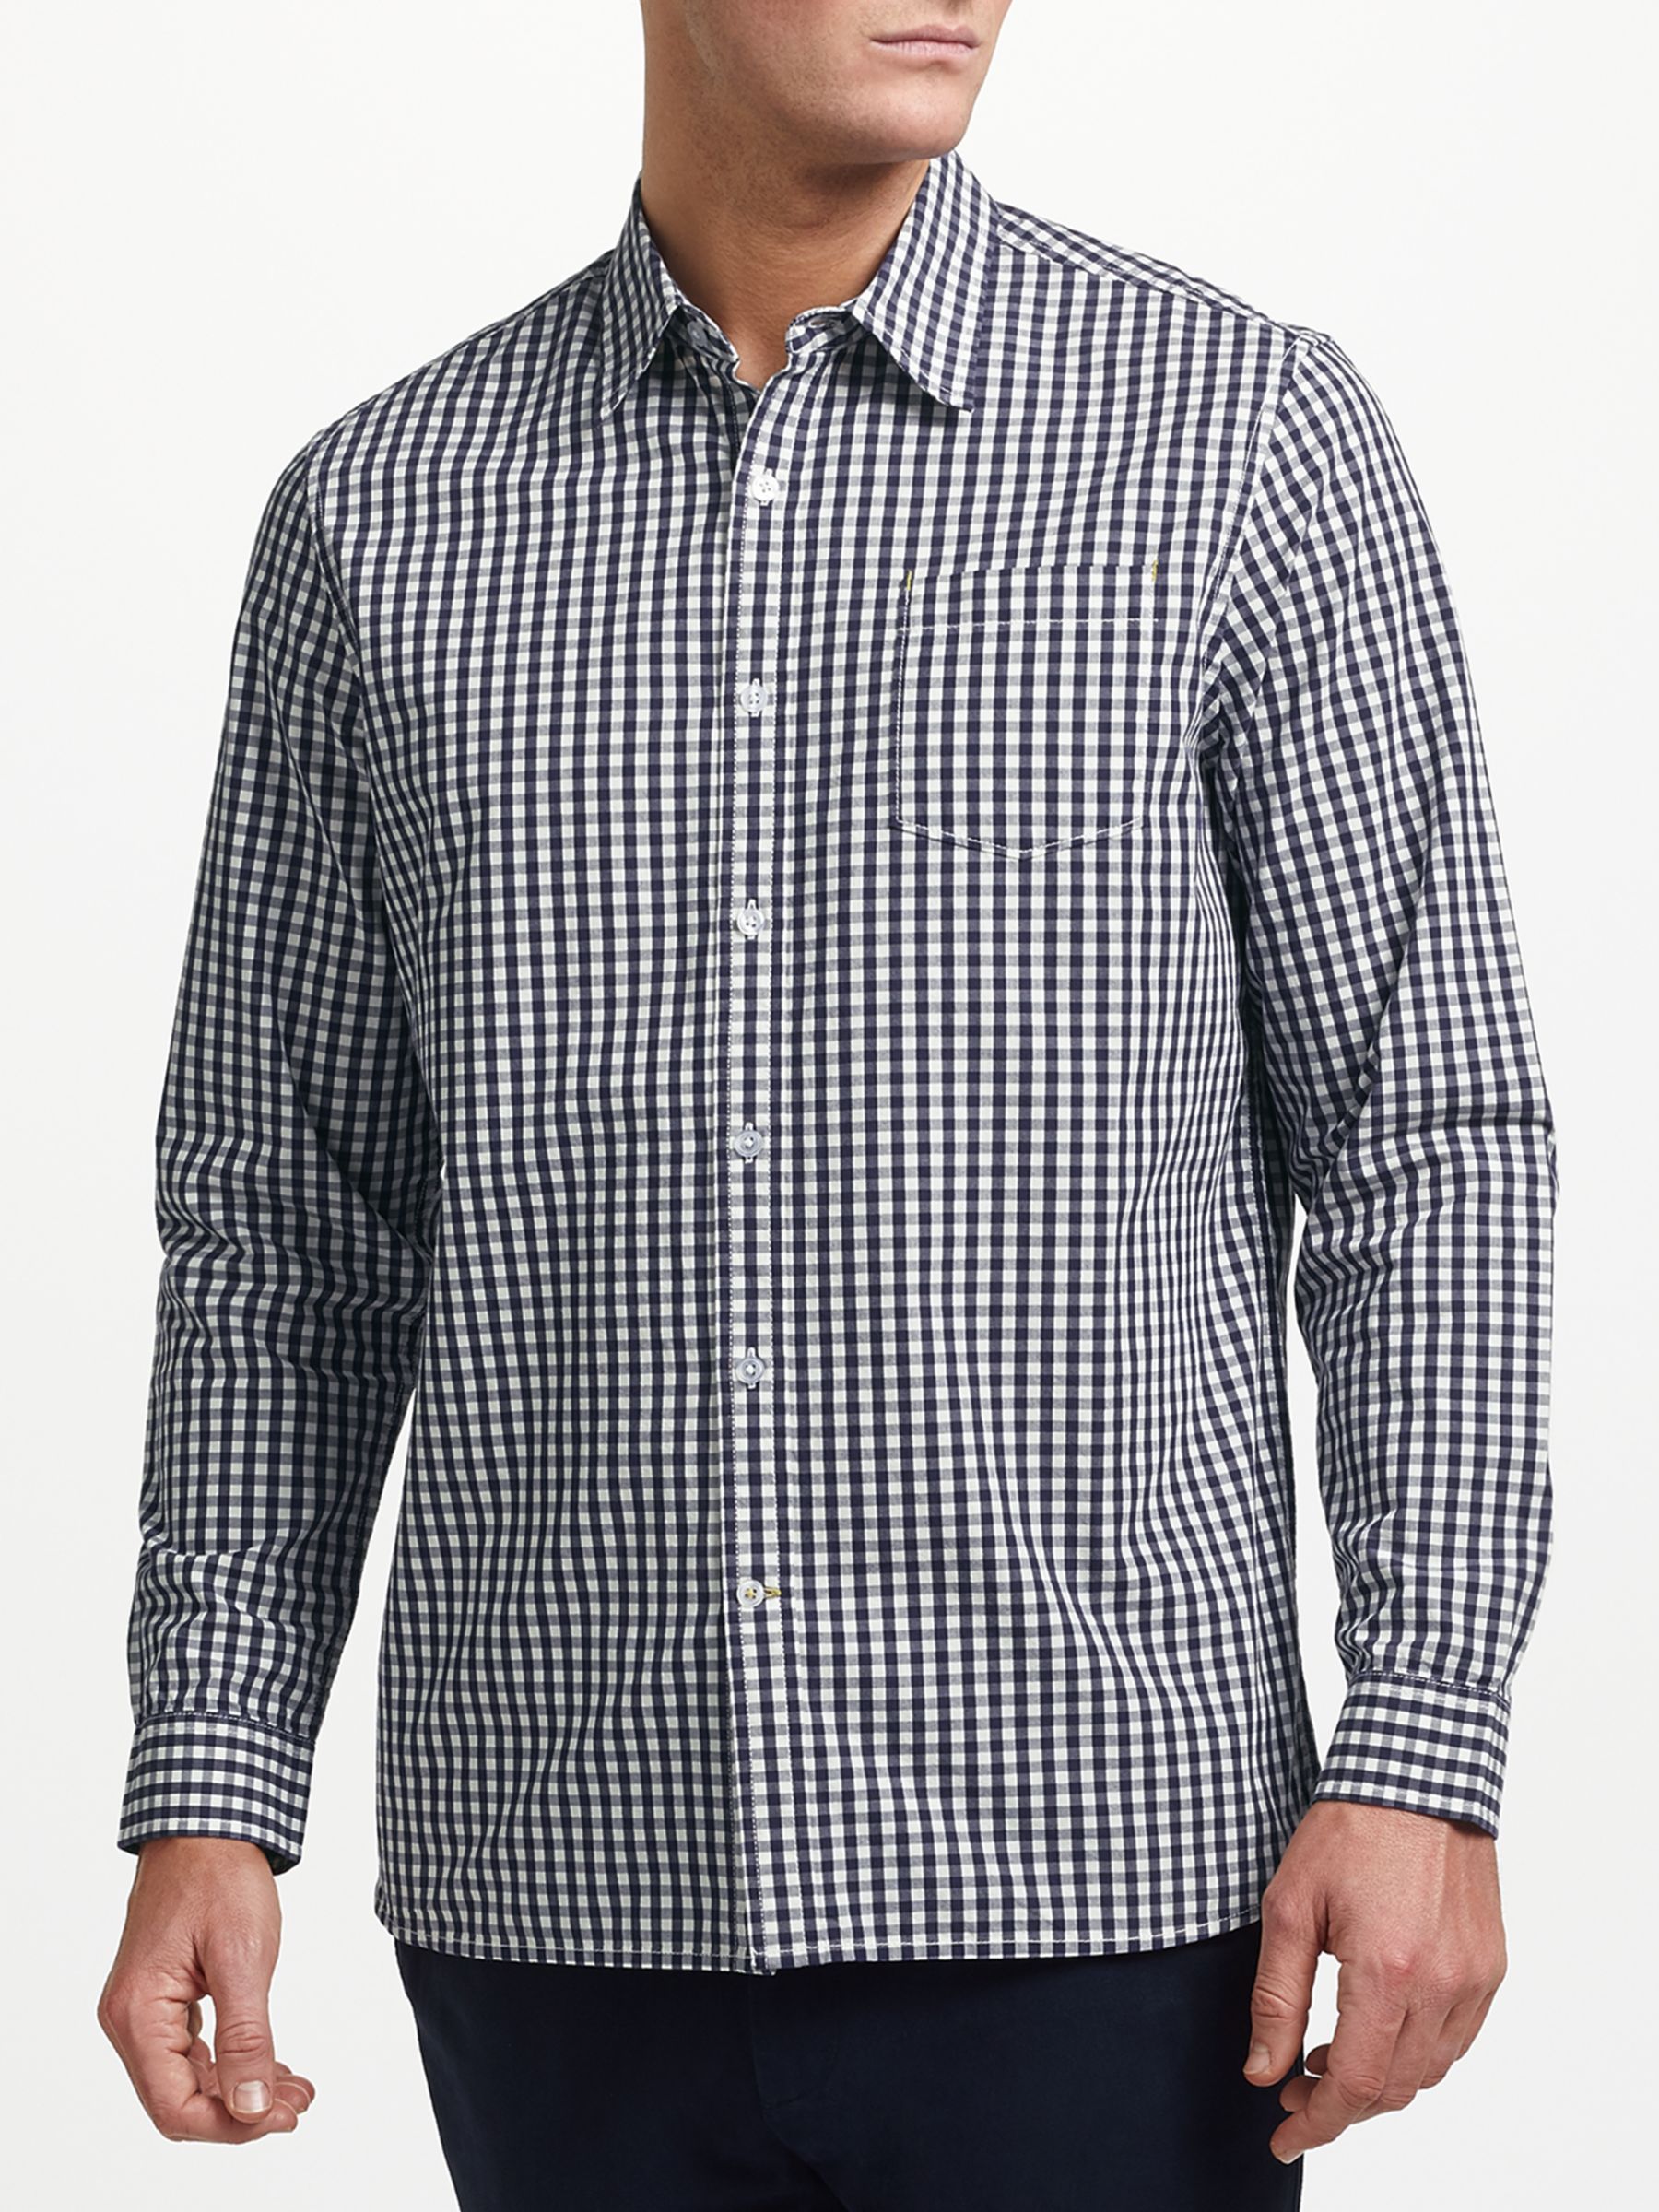 John Lewis & Partners Cotton Poplin Gingham Shirt, Navy, L